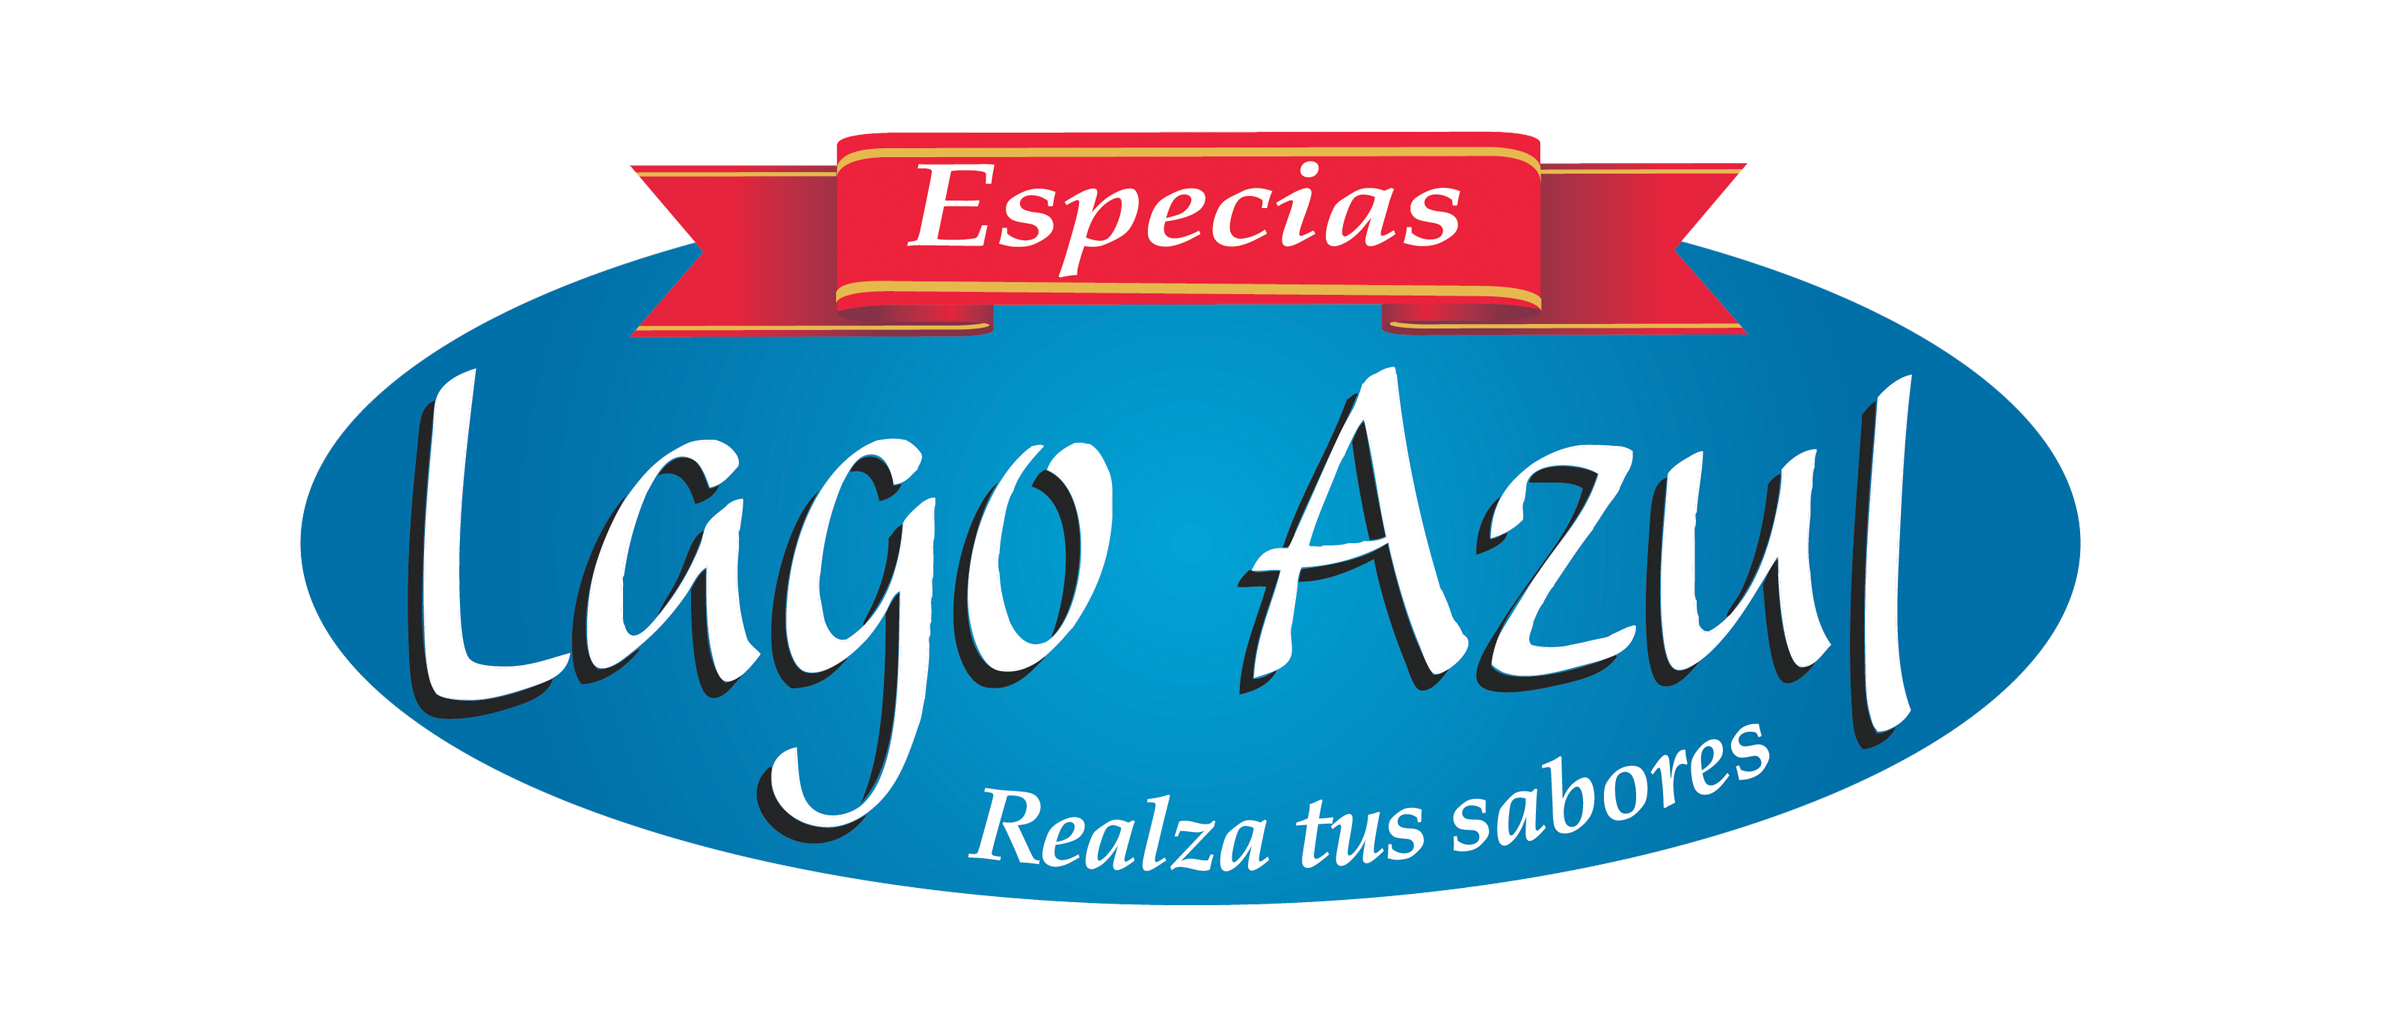 ESPECIAS LAGO AZUL